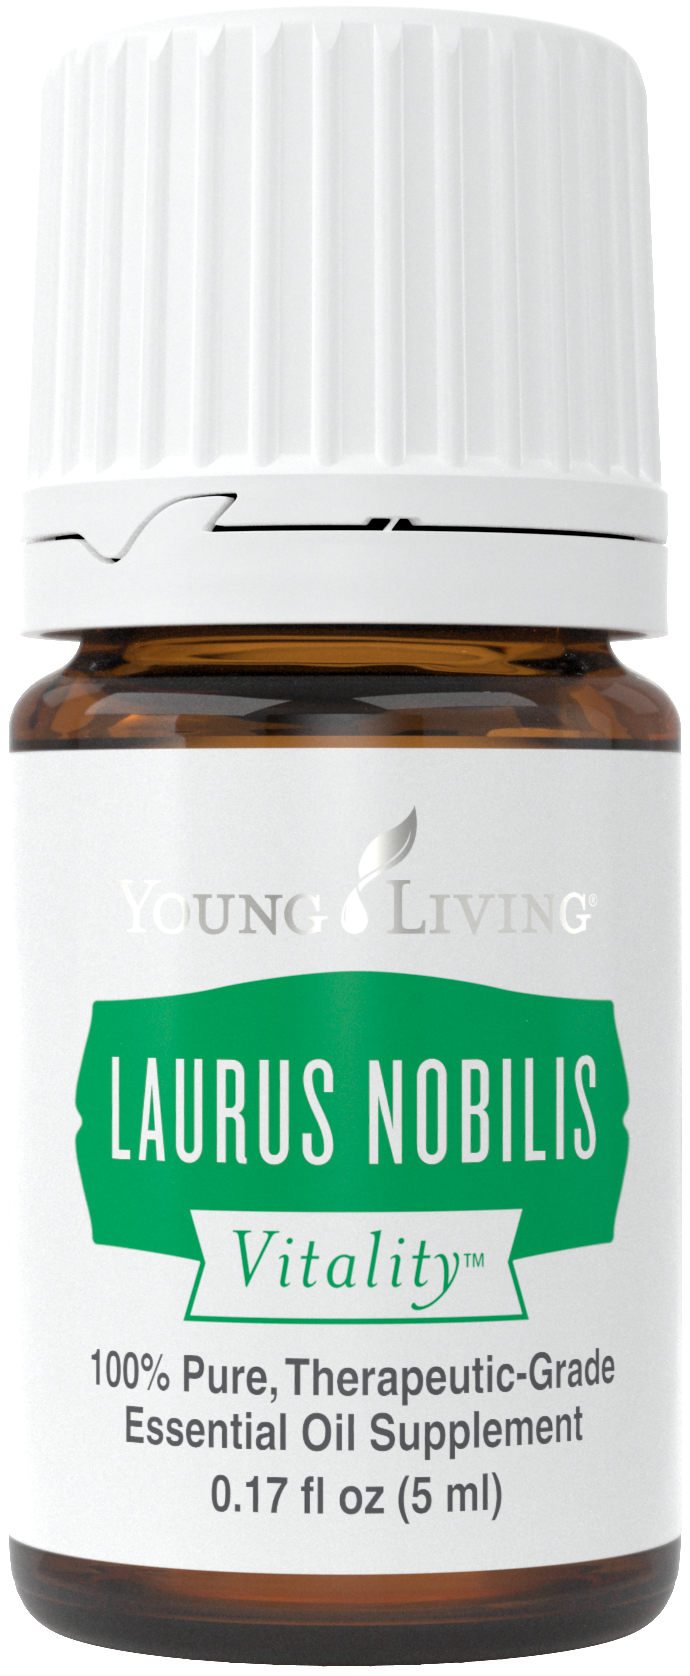 Laurus Nobilis Vitality Silo.png